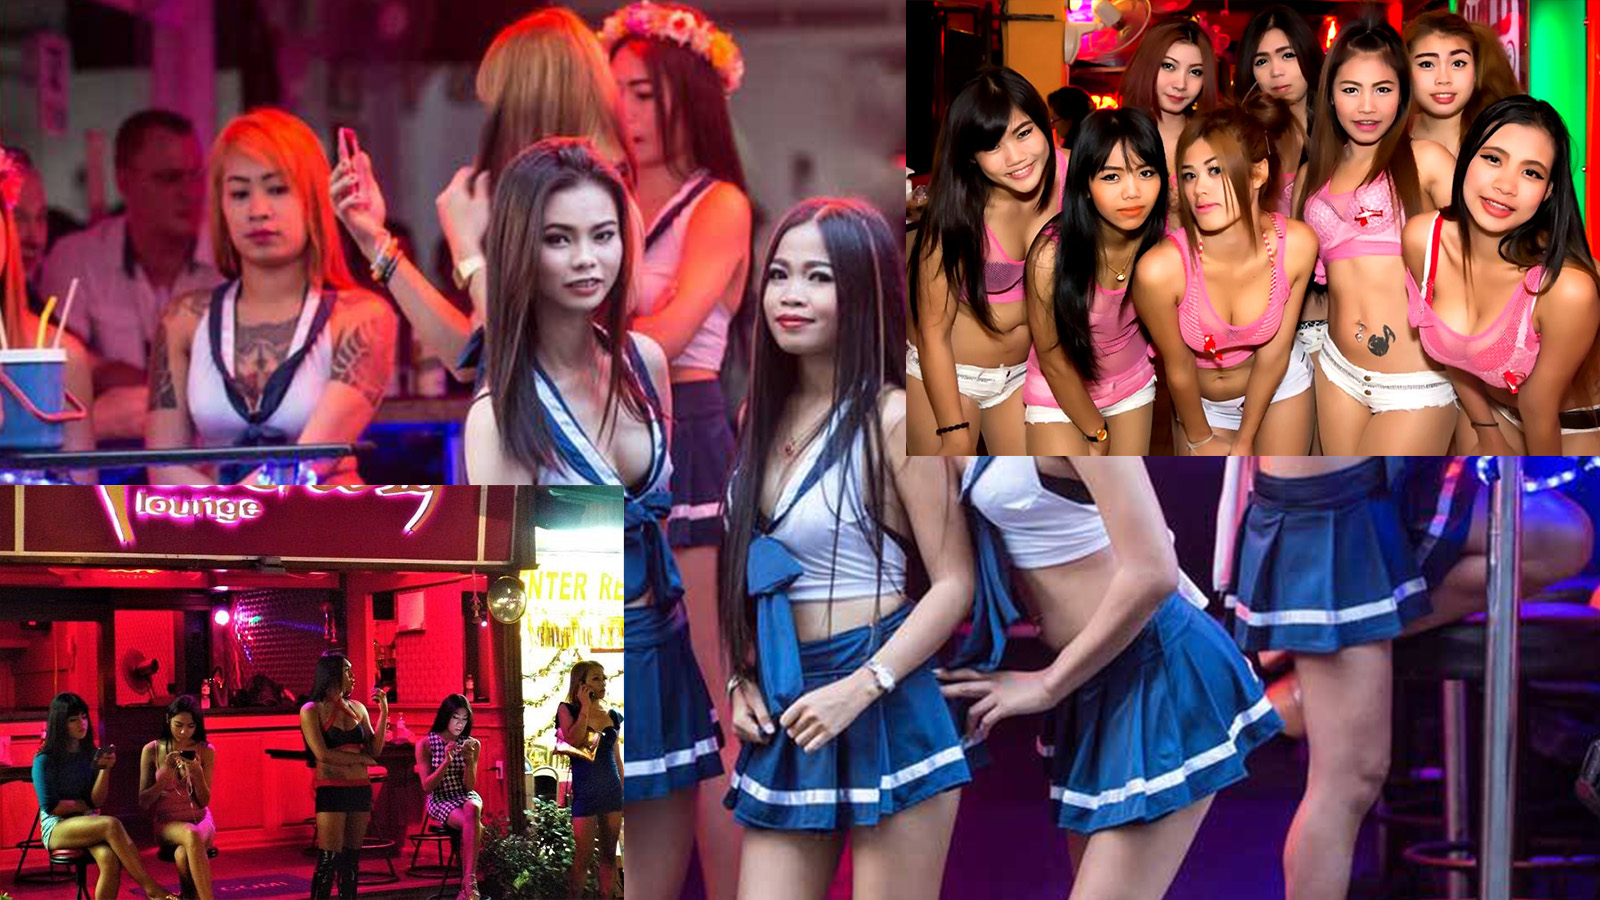 Tarif des prostituées de Bangkok